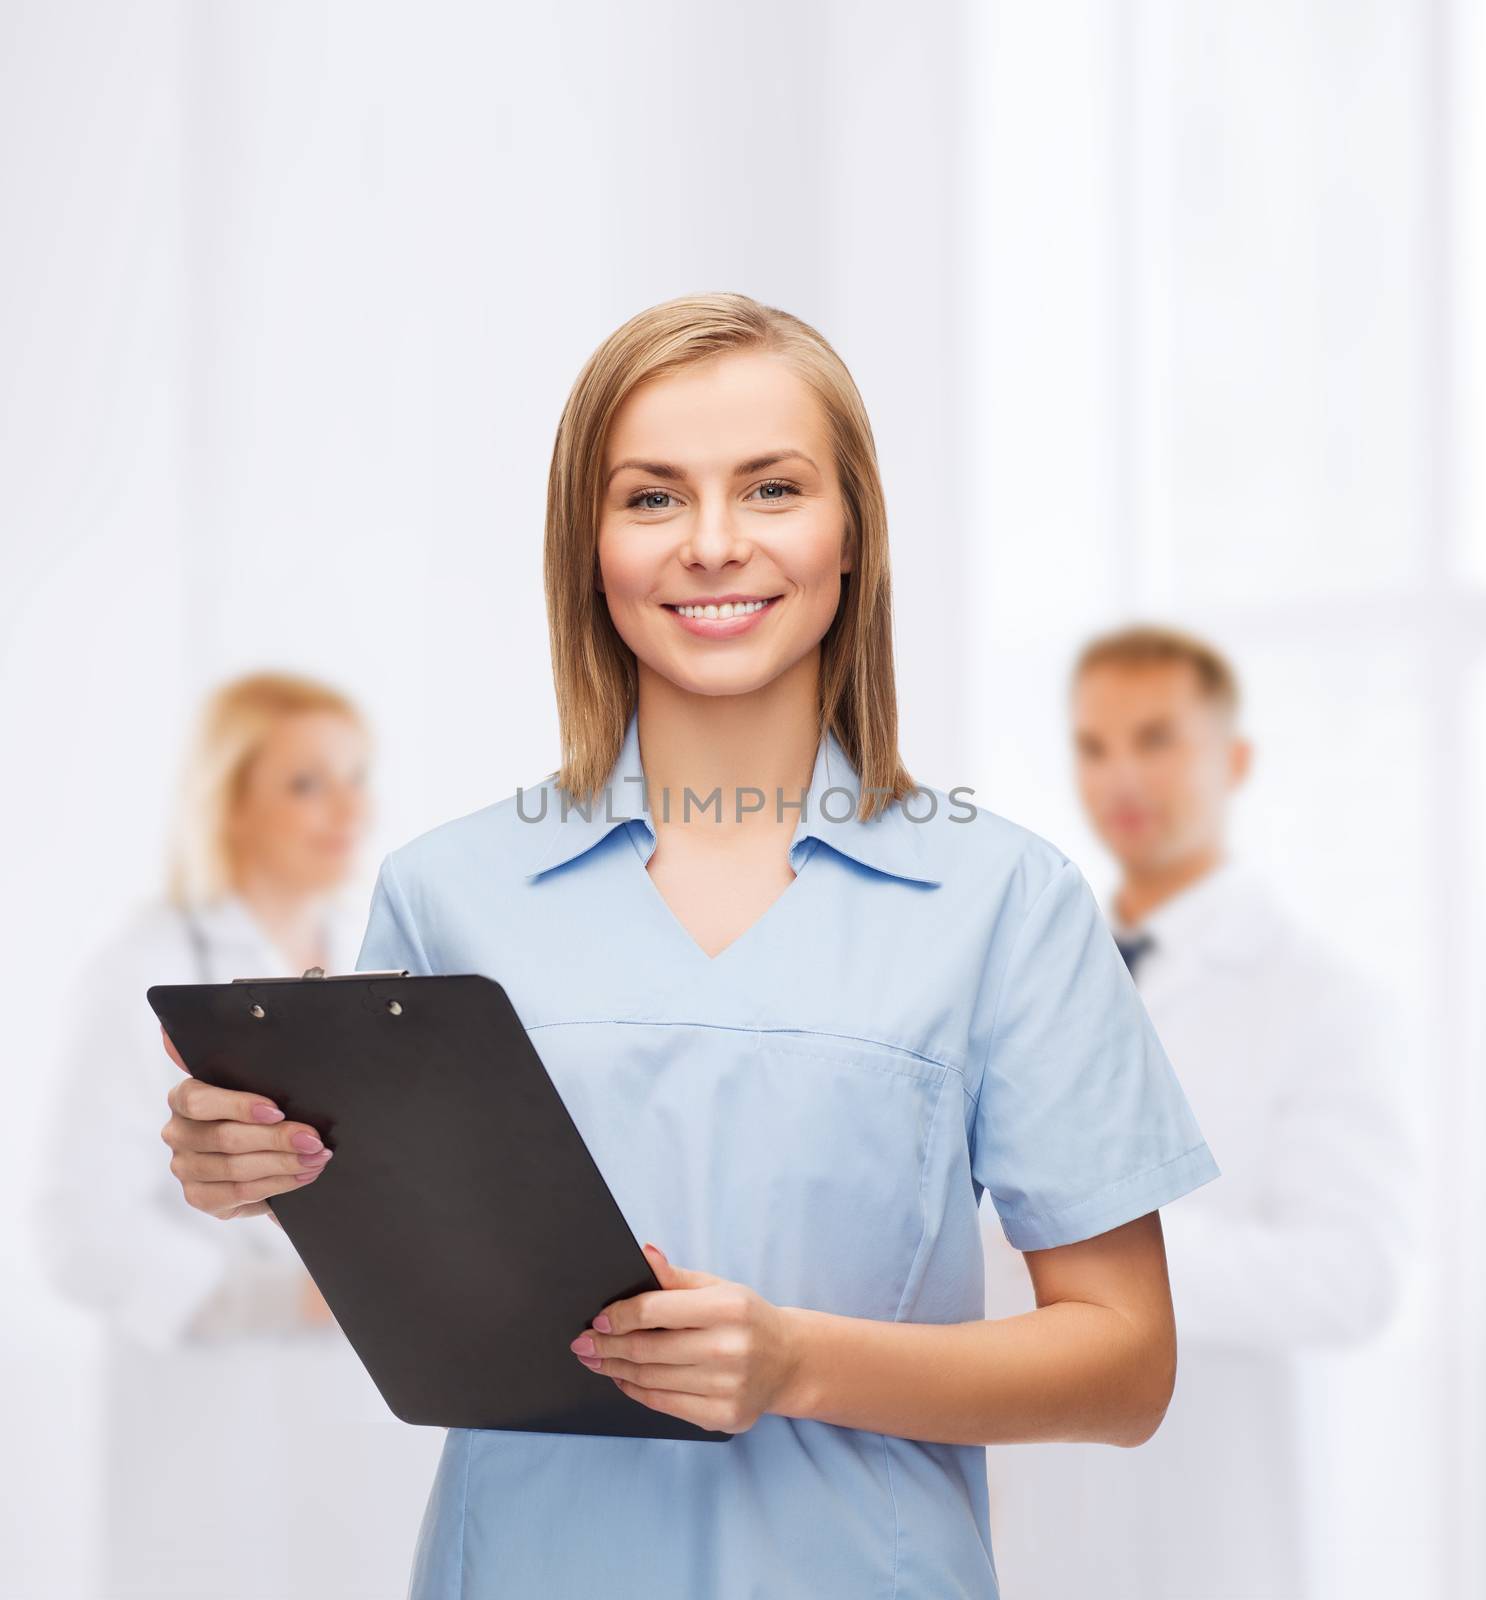 smiling female doctor or nurse with clipboard by dolgachov